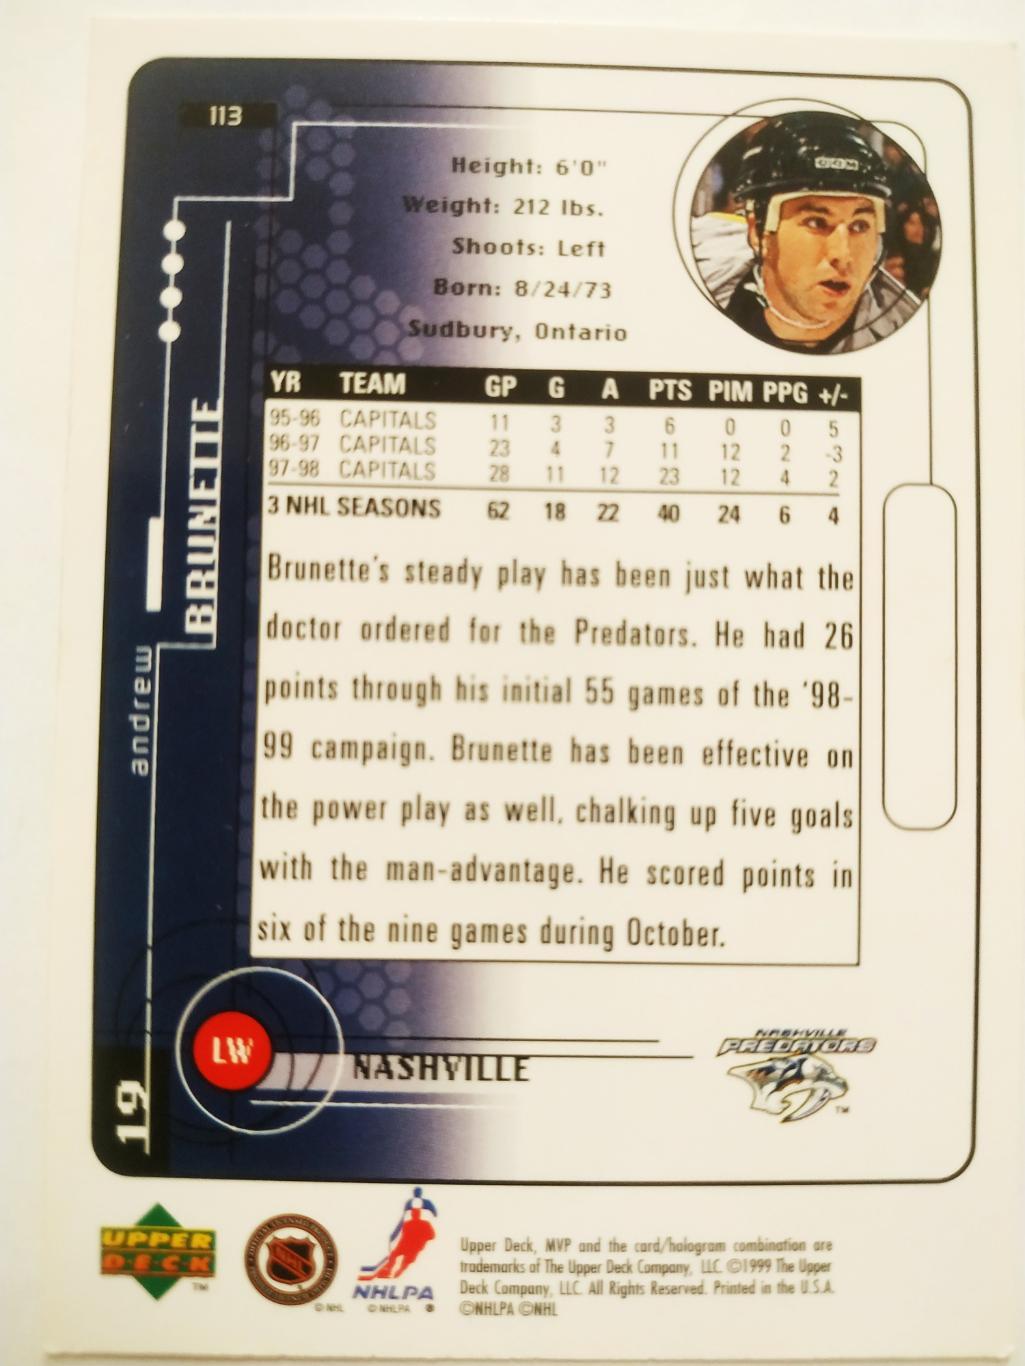 ХОККЕЙ КАРТОЧКА НХЛ UPPER DECK MVP 1998-1999 NHL ANDREW BRUNETTE NASHVILLE #113 1